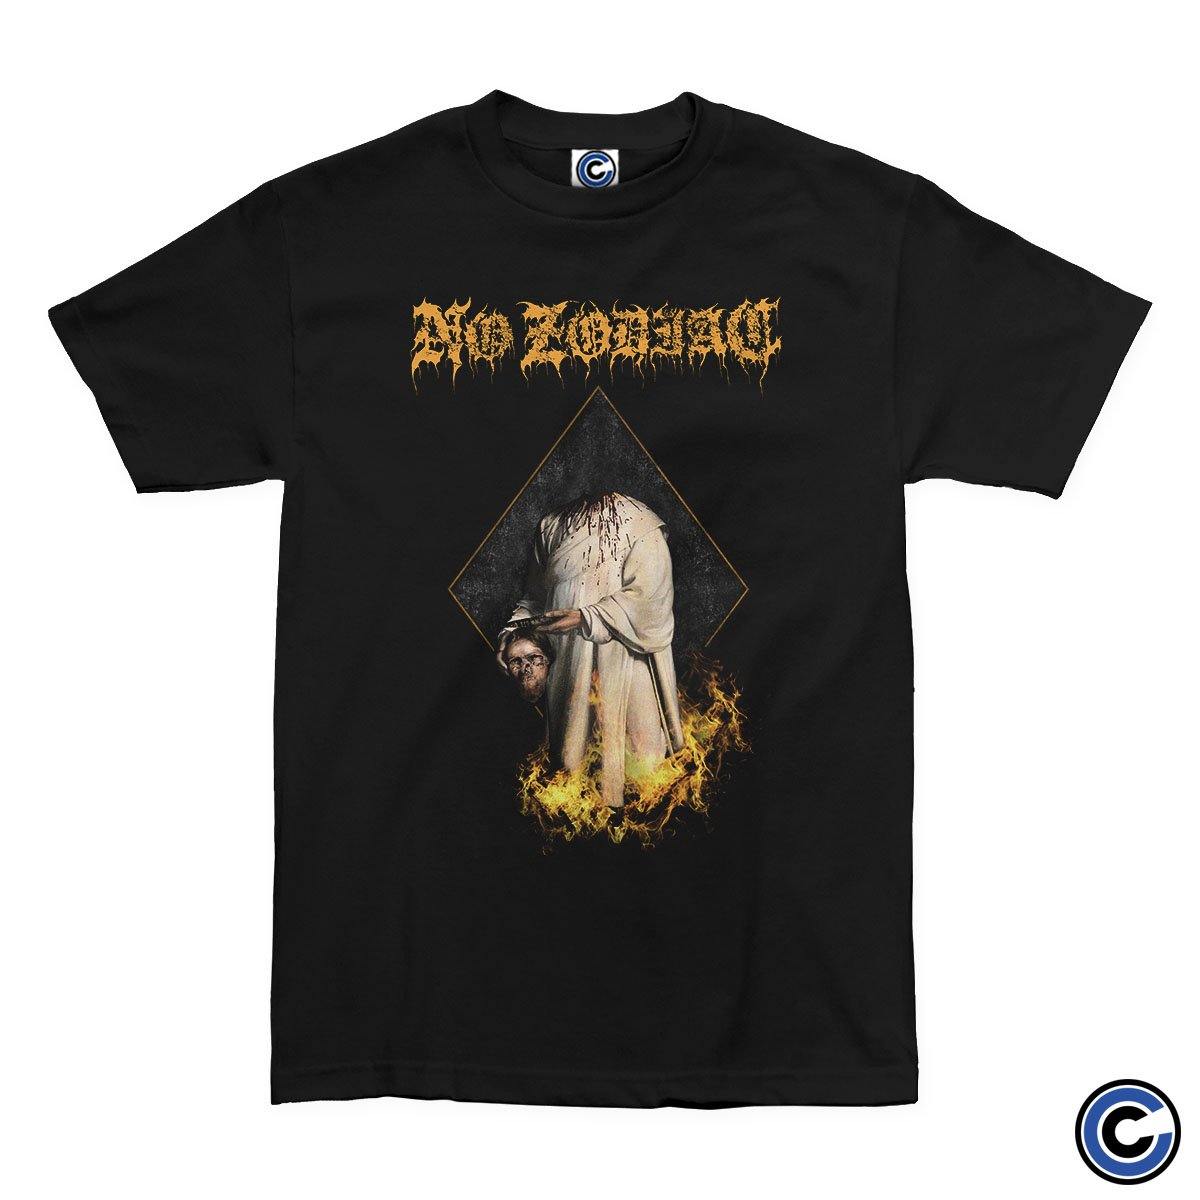 Buy – No Zodiac "Decapitated" Shirt – Band & Music Merch – Cold Cuts Merch